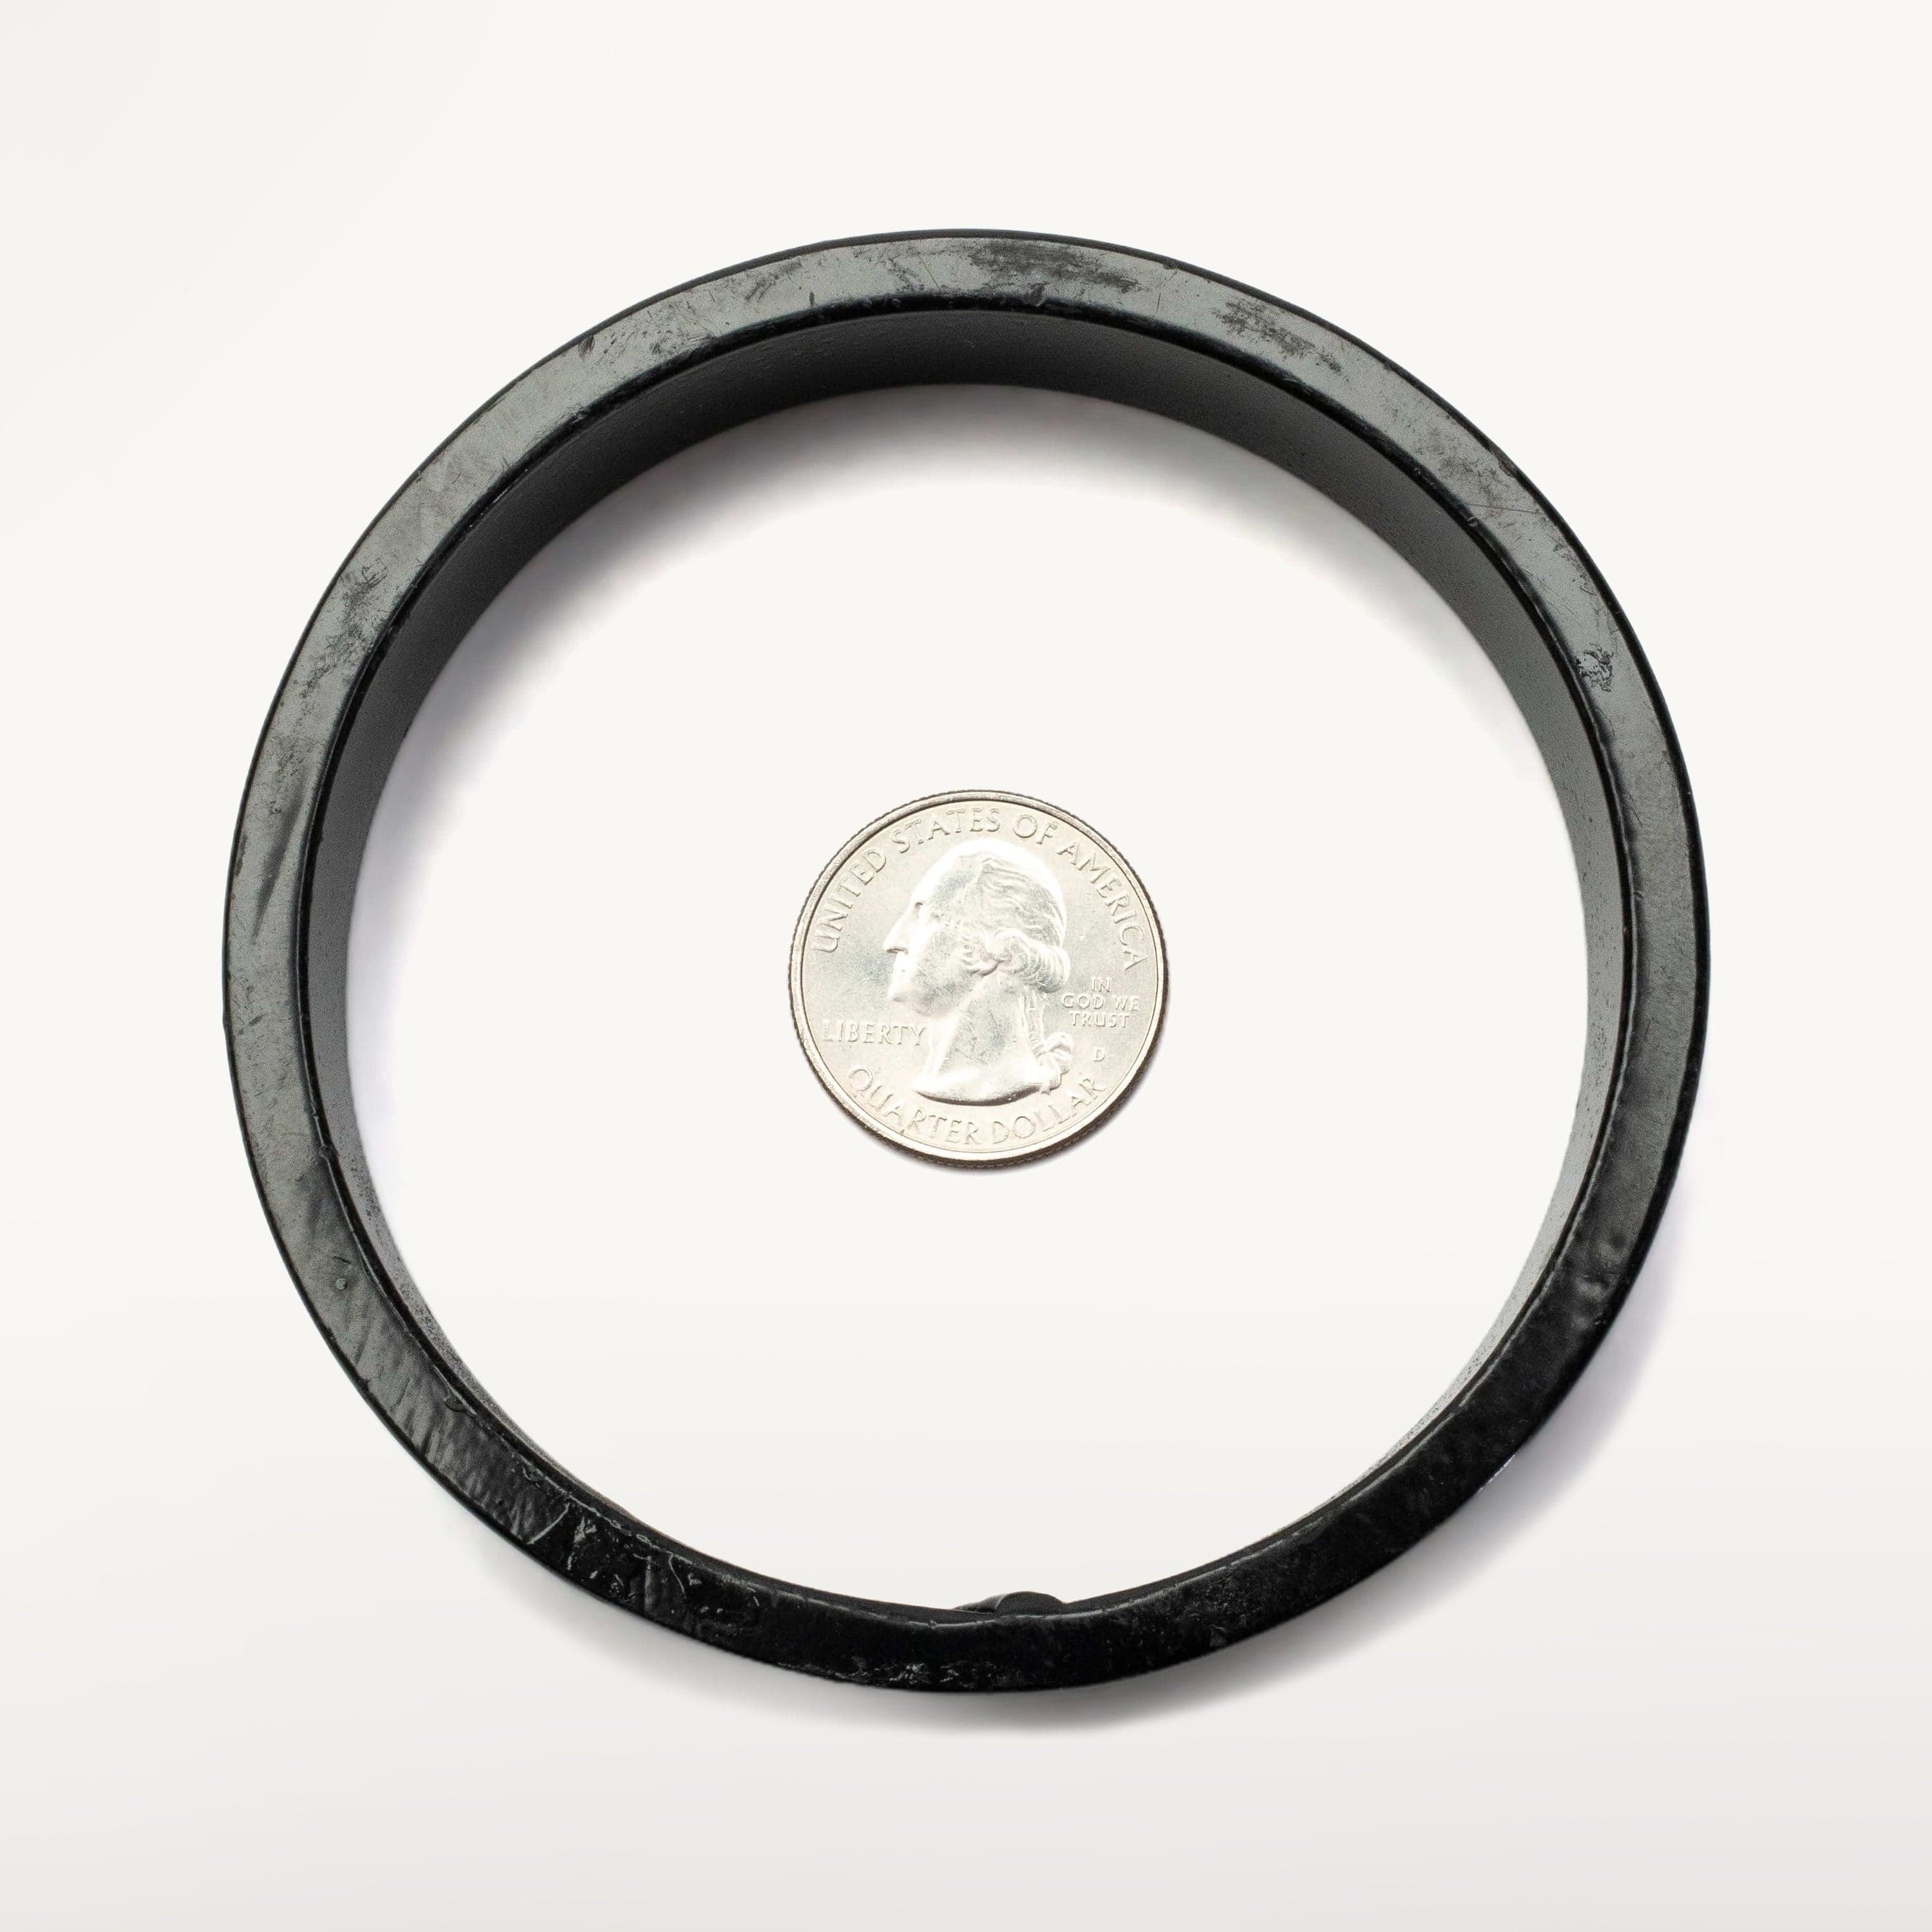 Kalifano Black Metal Ring Sphere Stand - 8 cm / 3" MS8